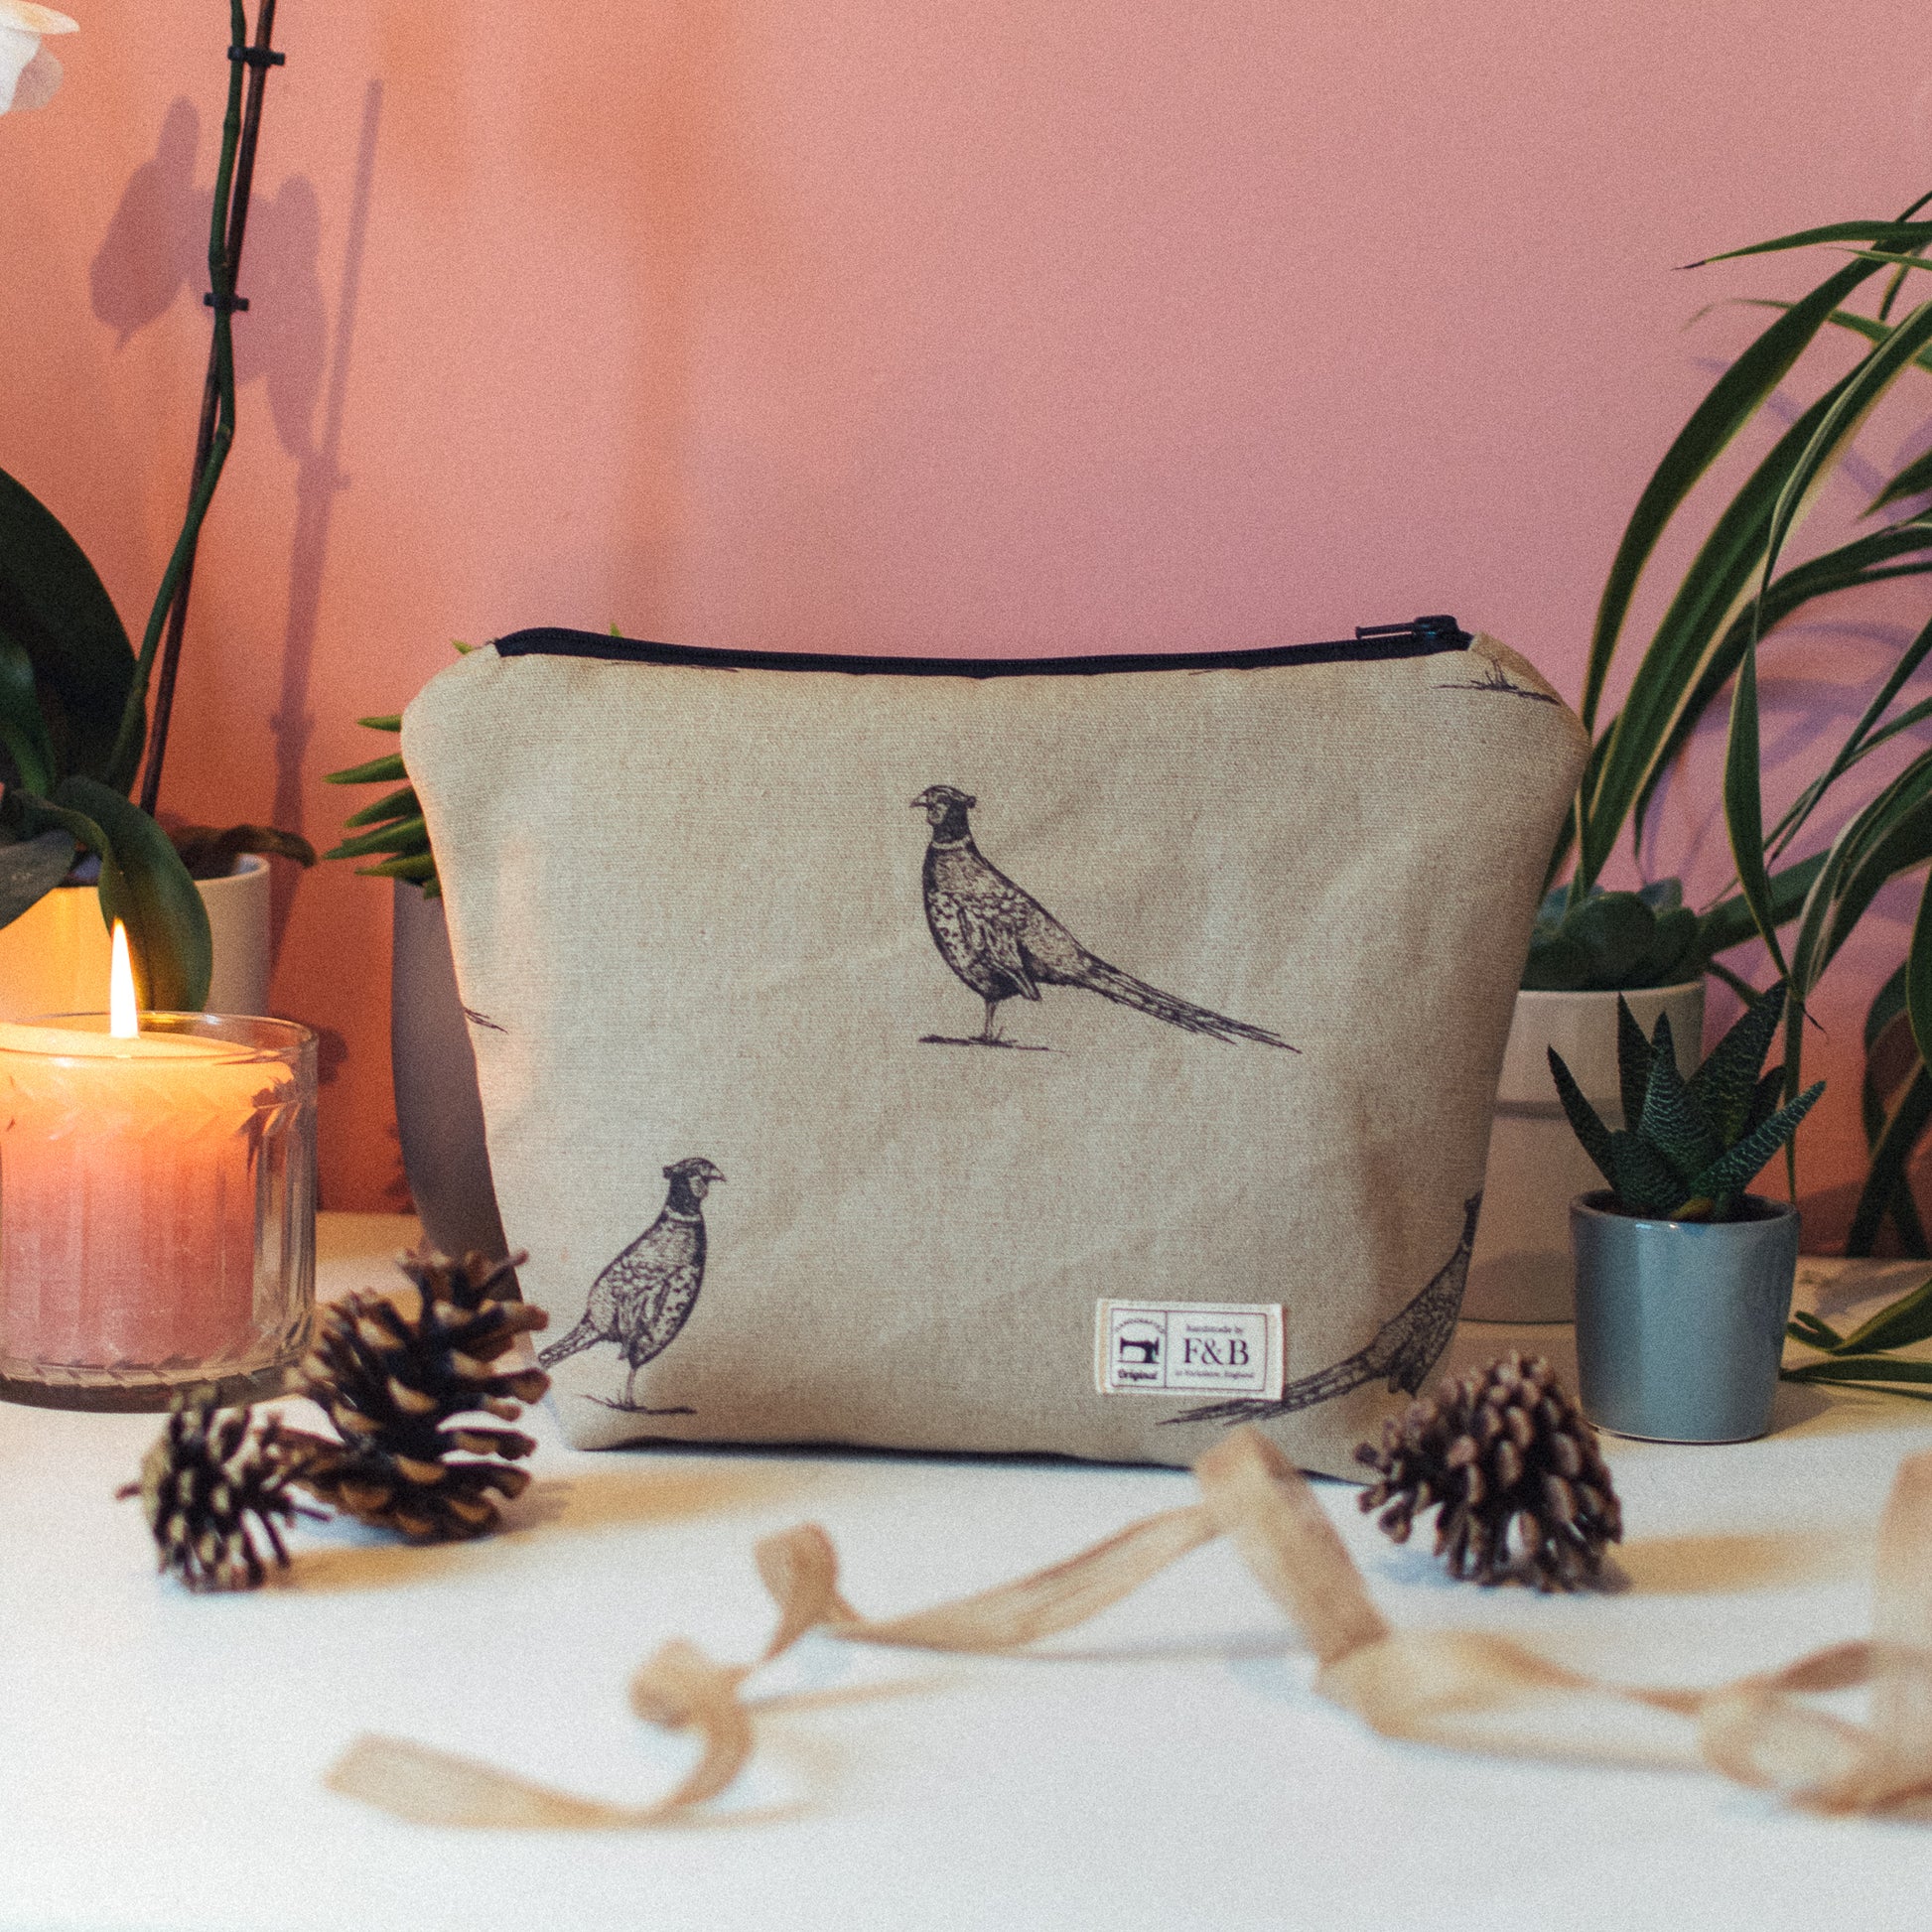 Pheasant Illustration Wash Bag Handmade by F&B Crafts in Malton